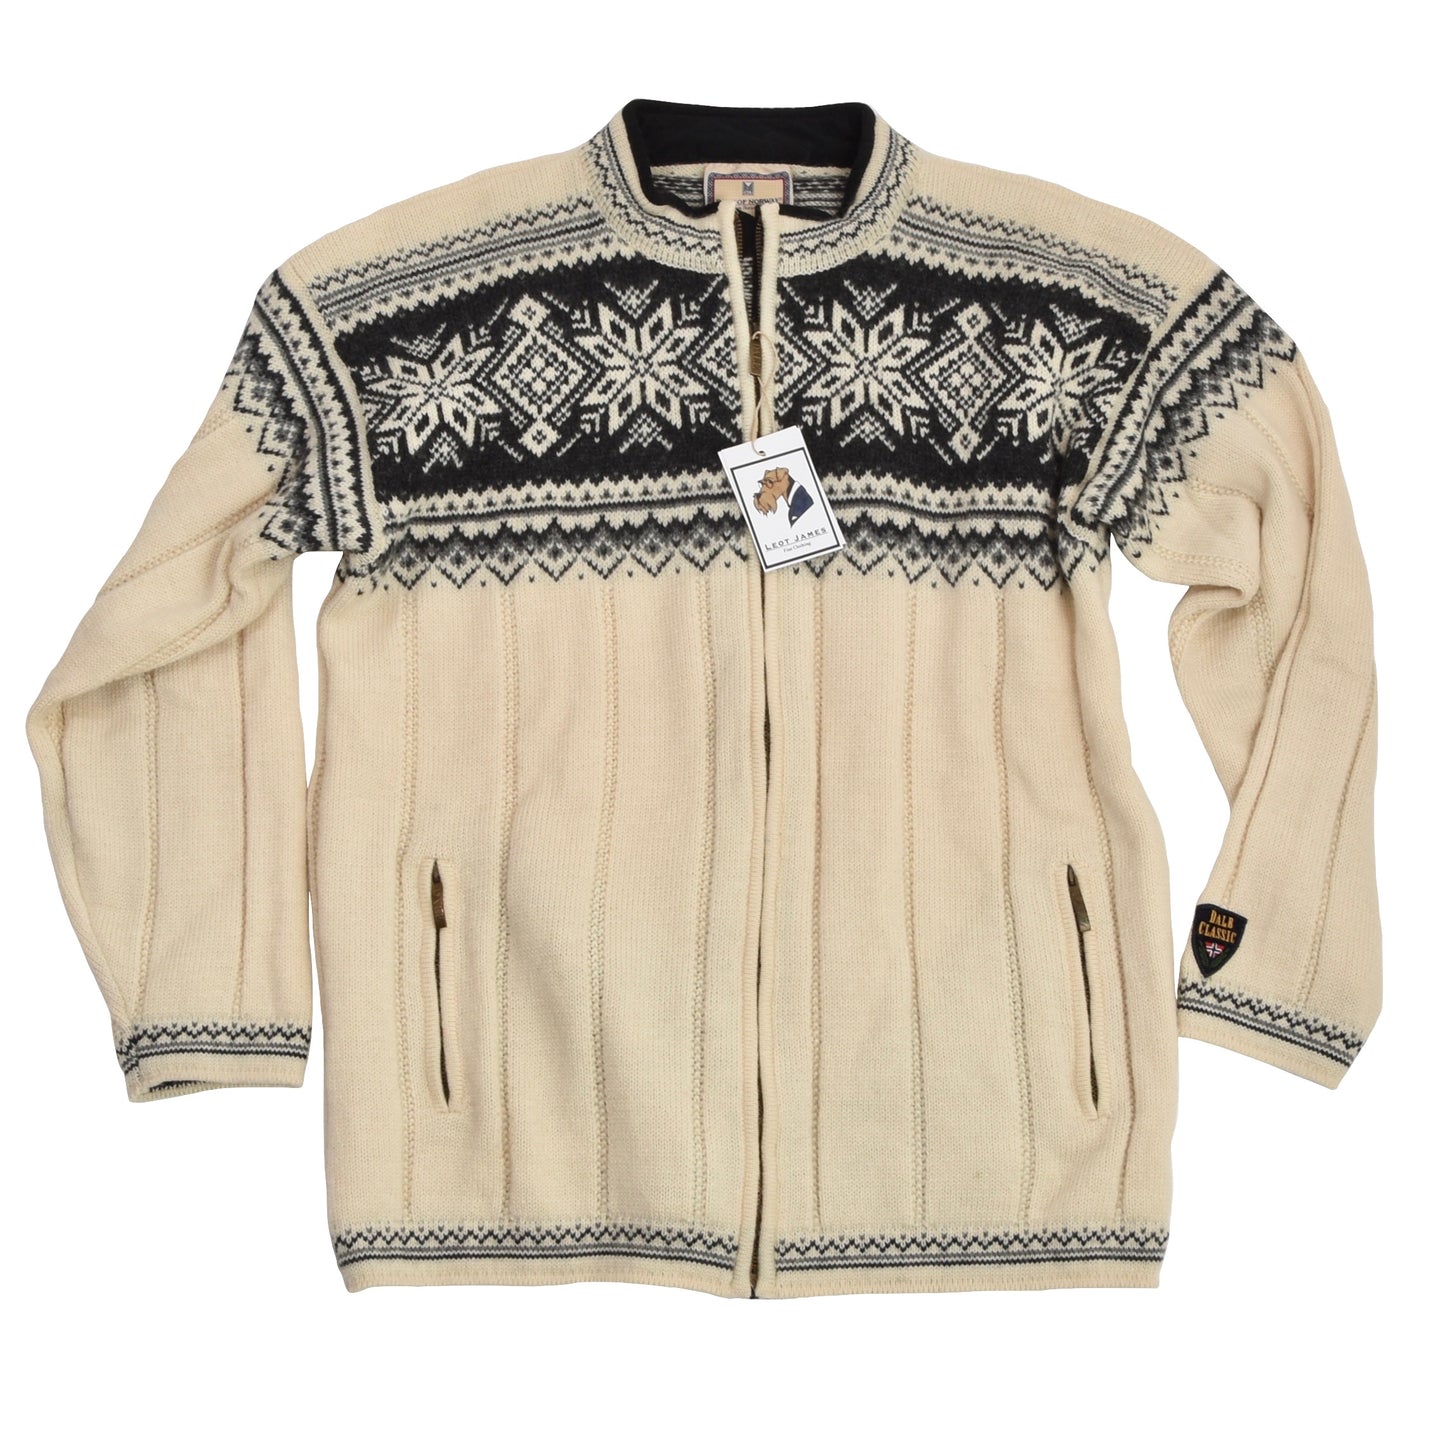 Dale of Norway Wool Zip Cardigan Sweater Size XL - Cream